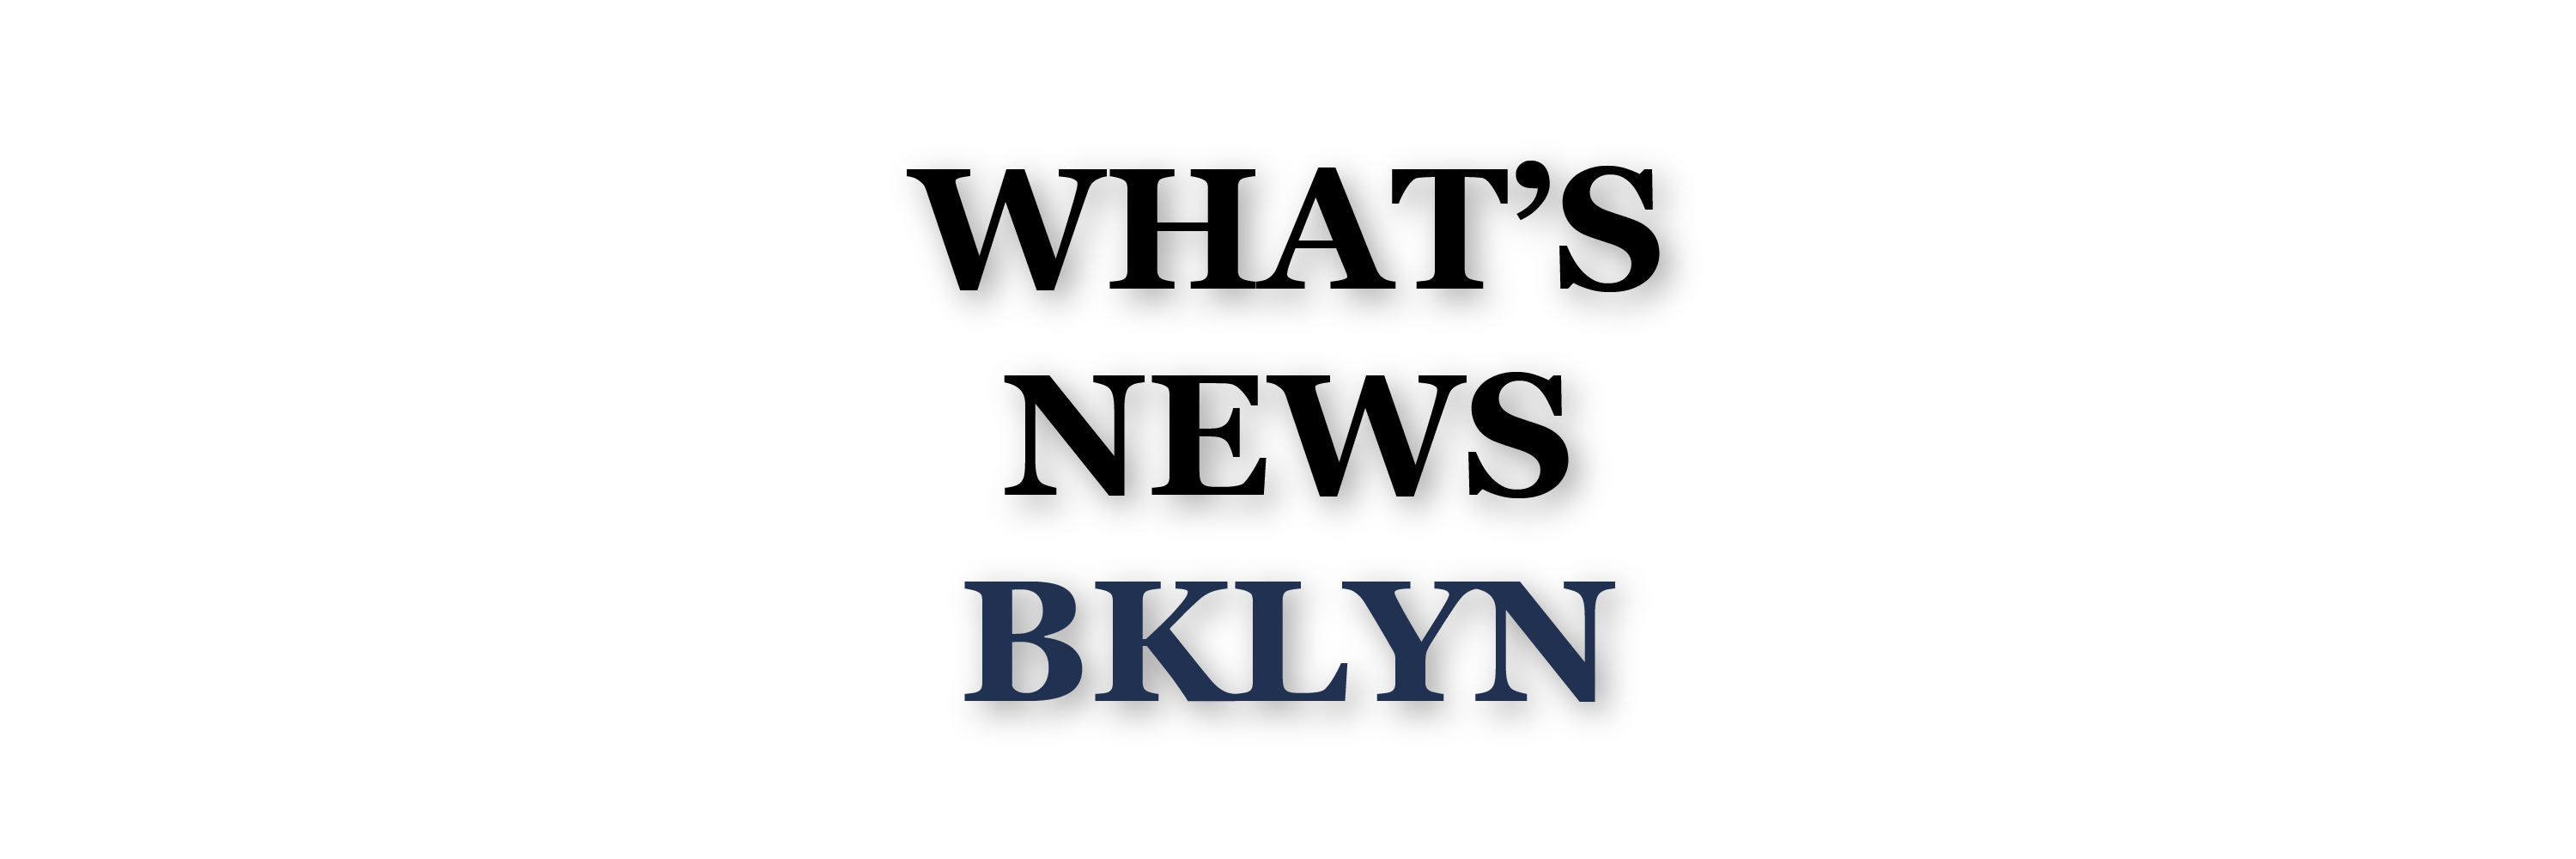 whats-news-bklyn-logo-200